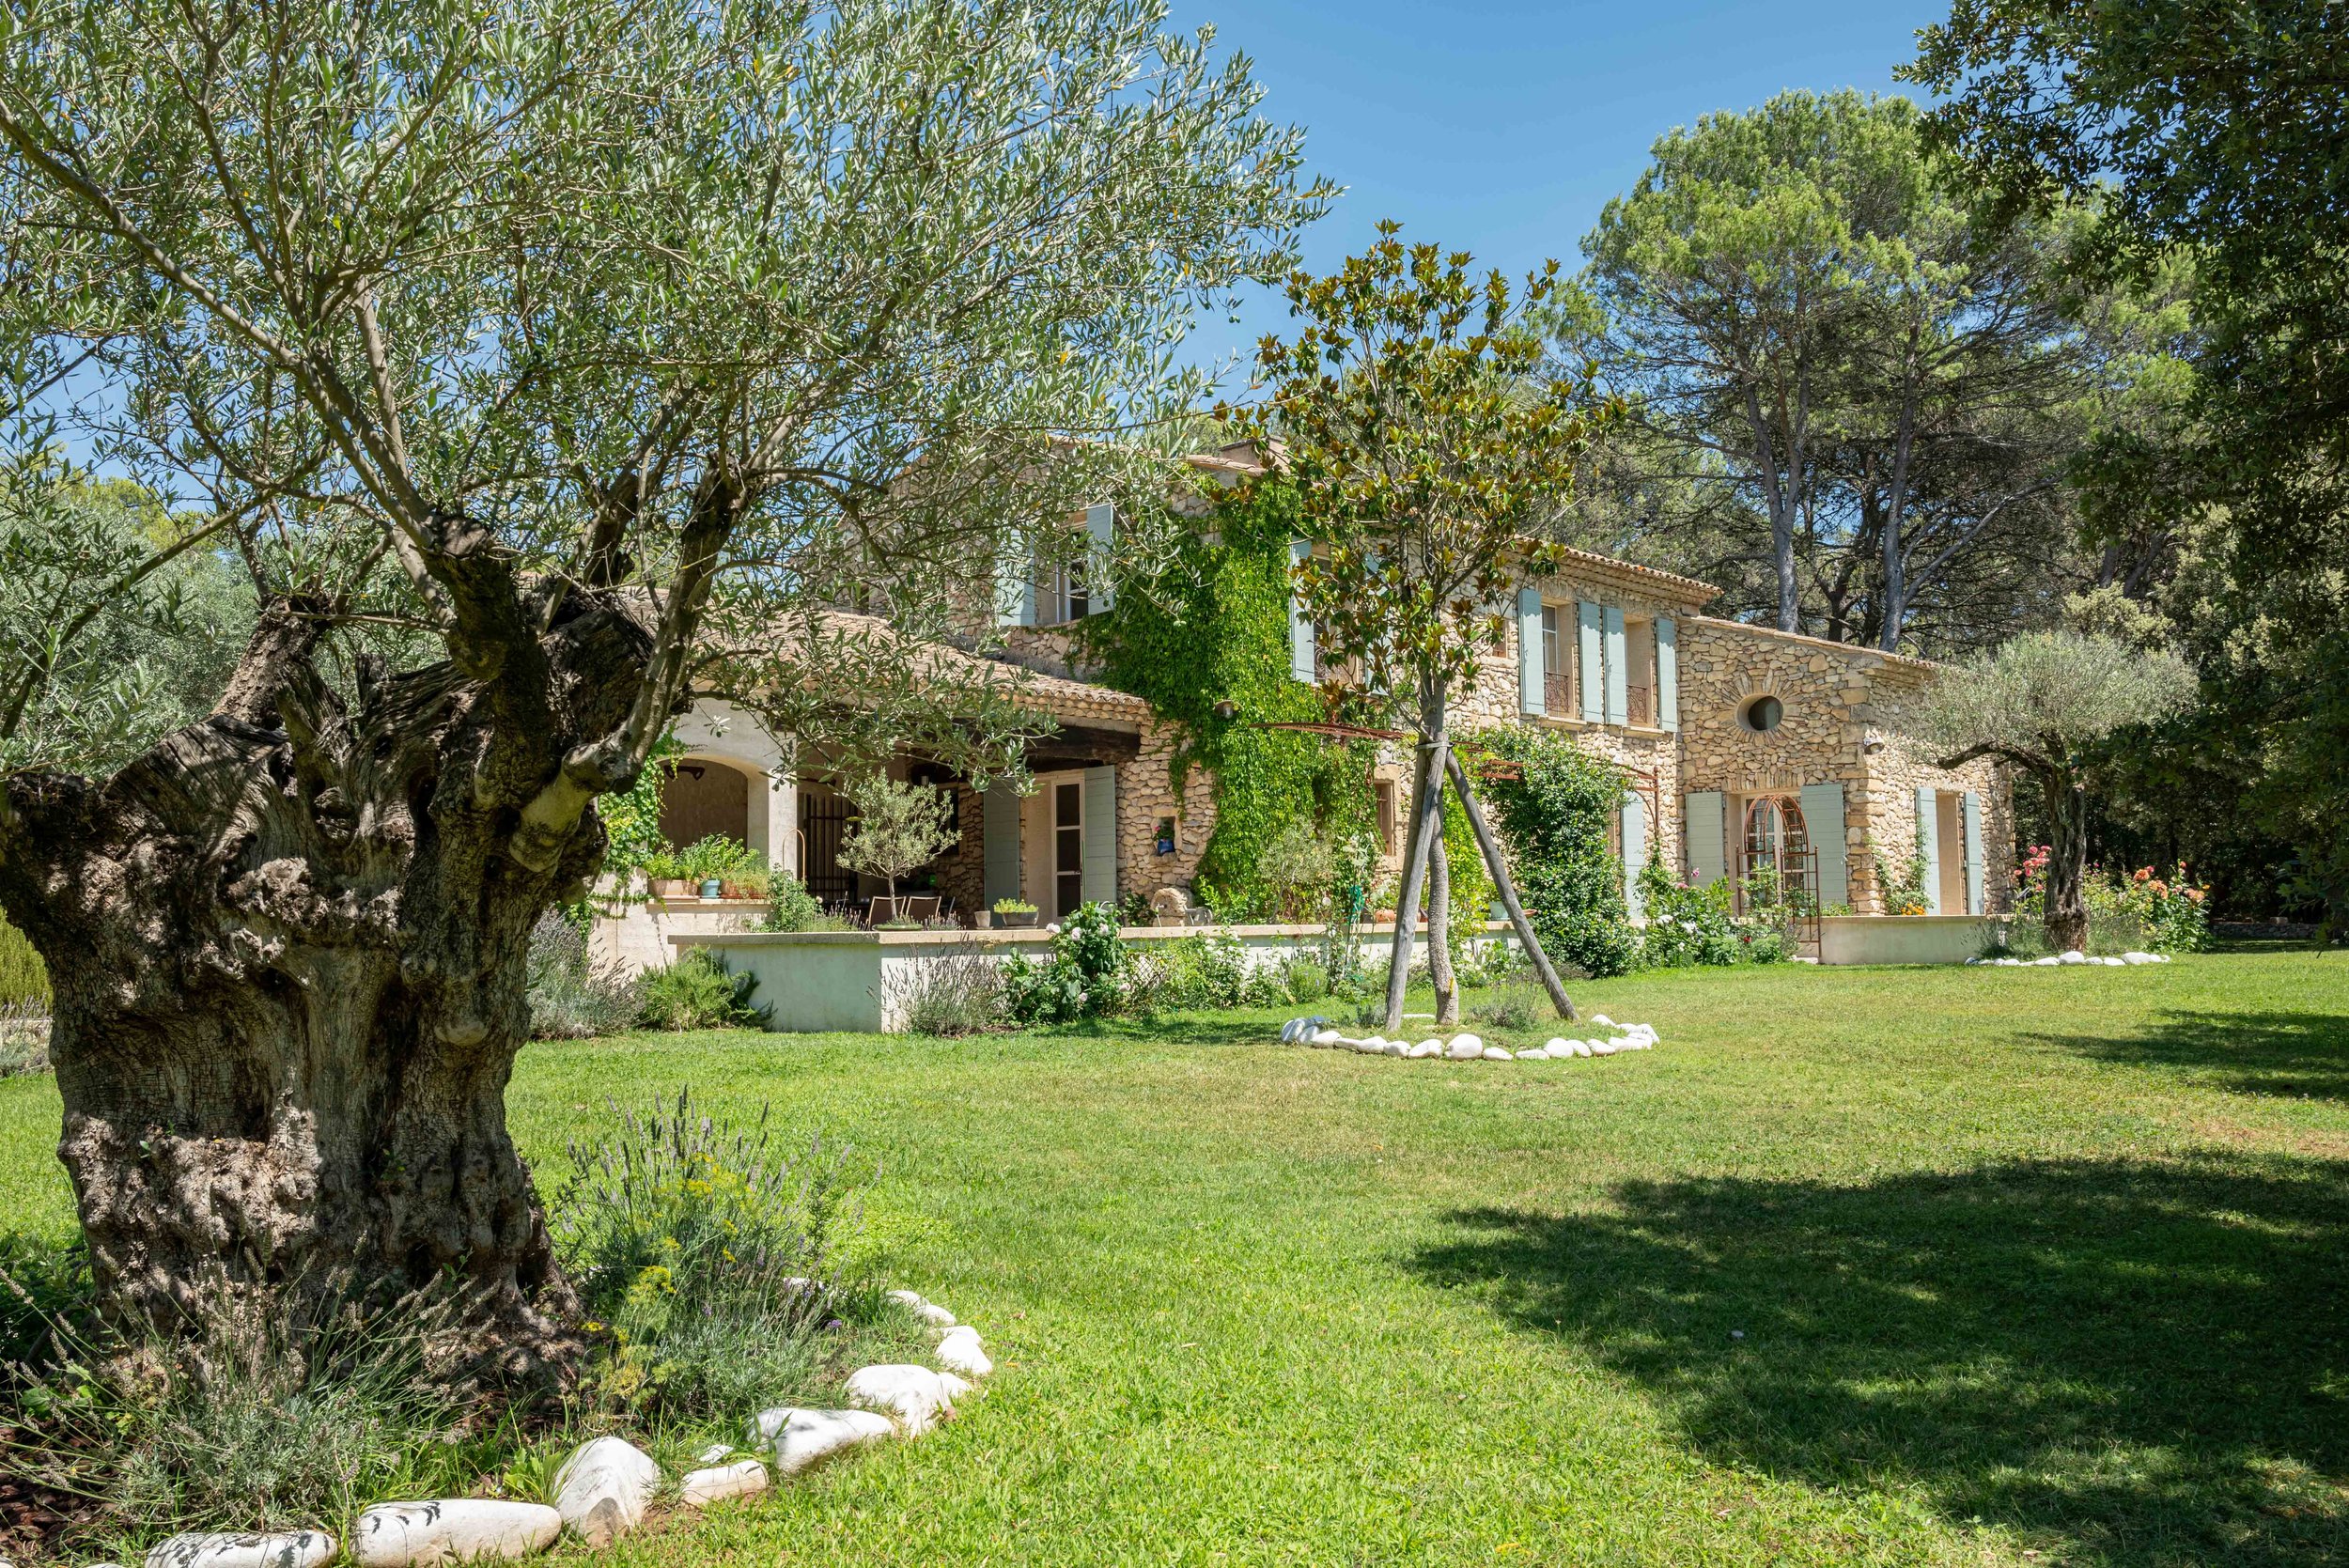 Francis York Stone Farmhouse Next to a Provencal Village Near Aix-en-Provence 00005.jpg